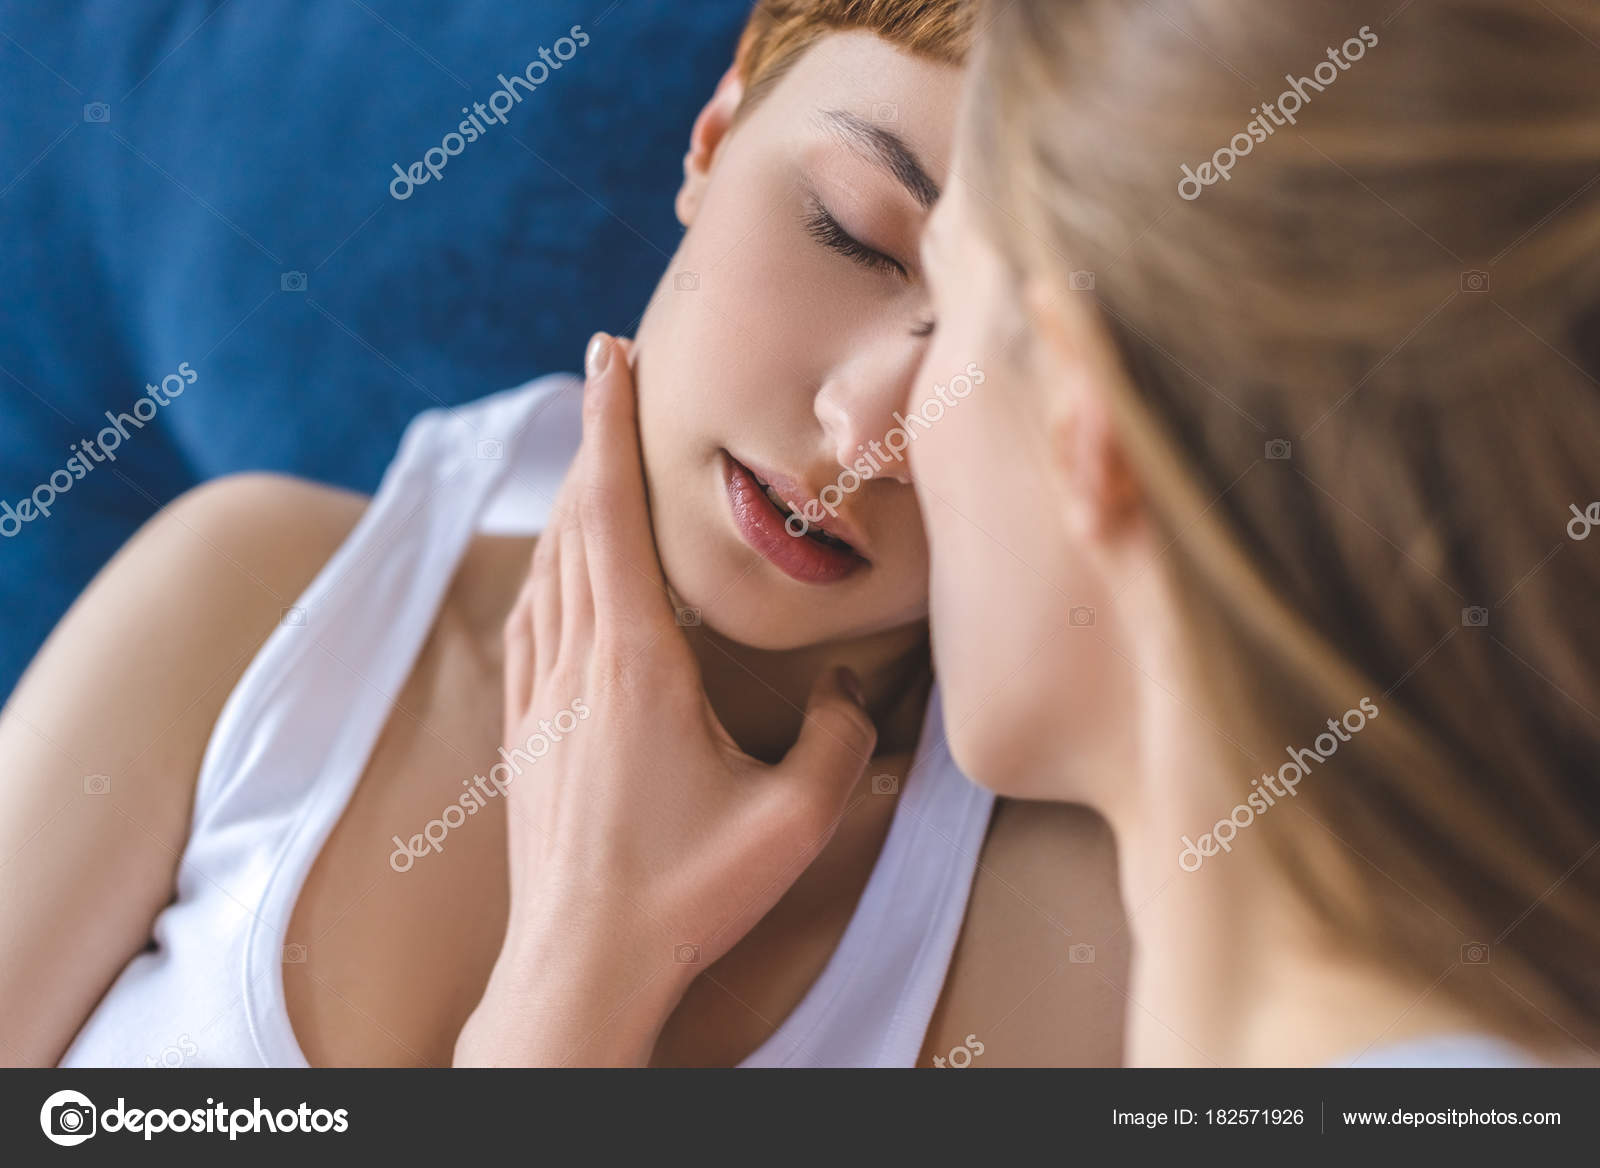 Hot Blonde Lesbian Kiss